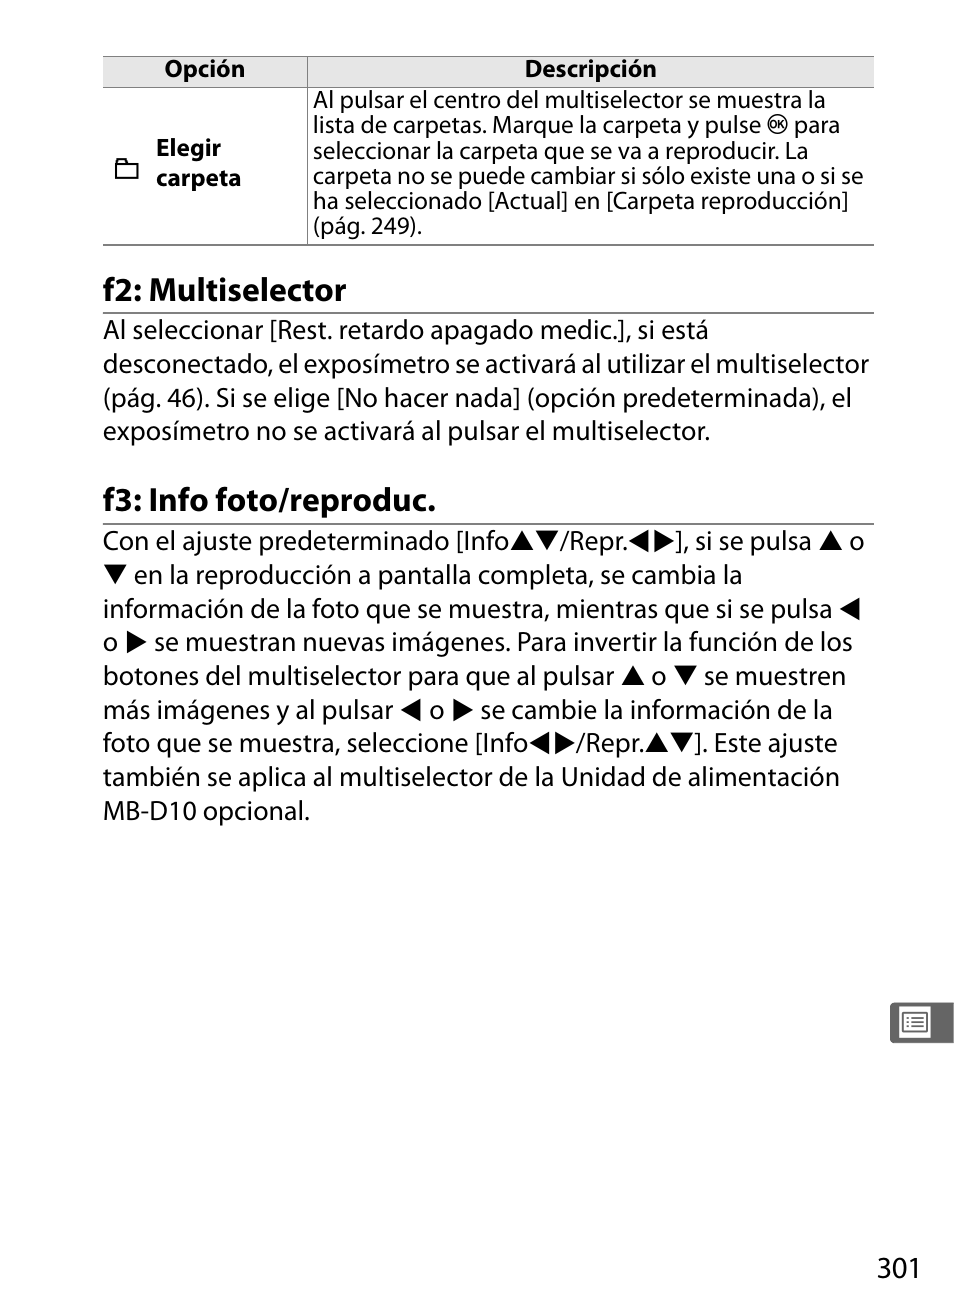 F2: multiselector, F3: info foto/reproduc | Nikon D300 Manual del usuario | Página 327 / 452